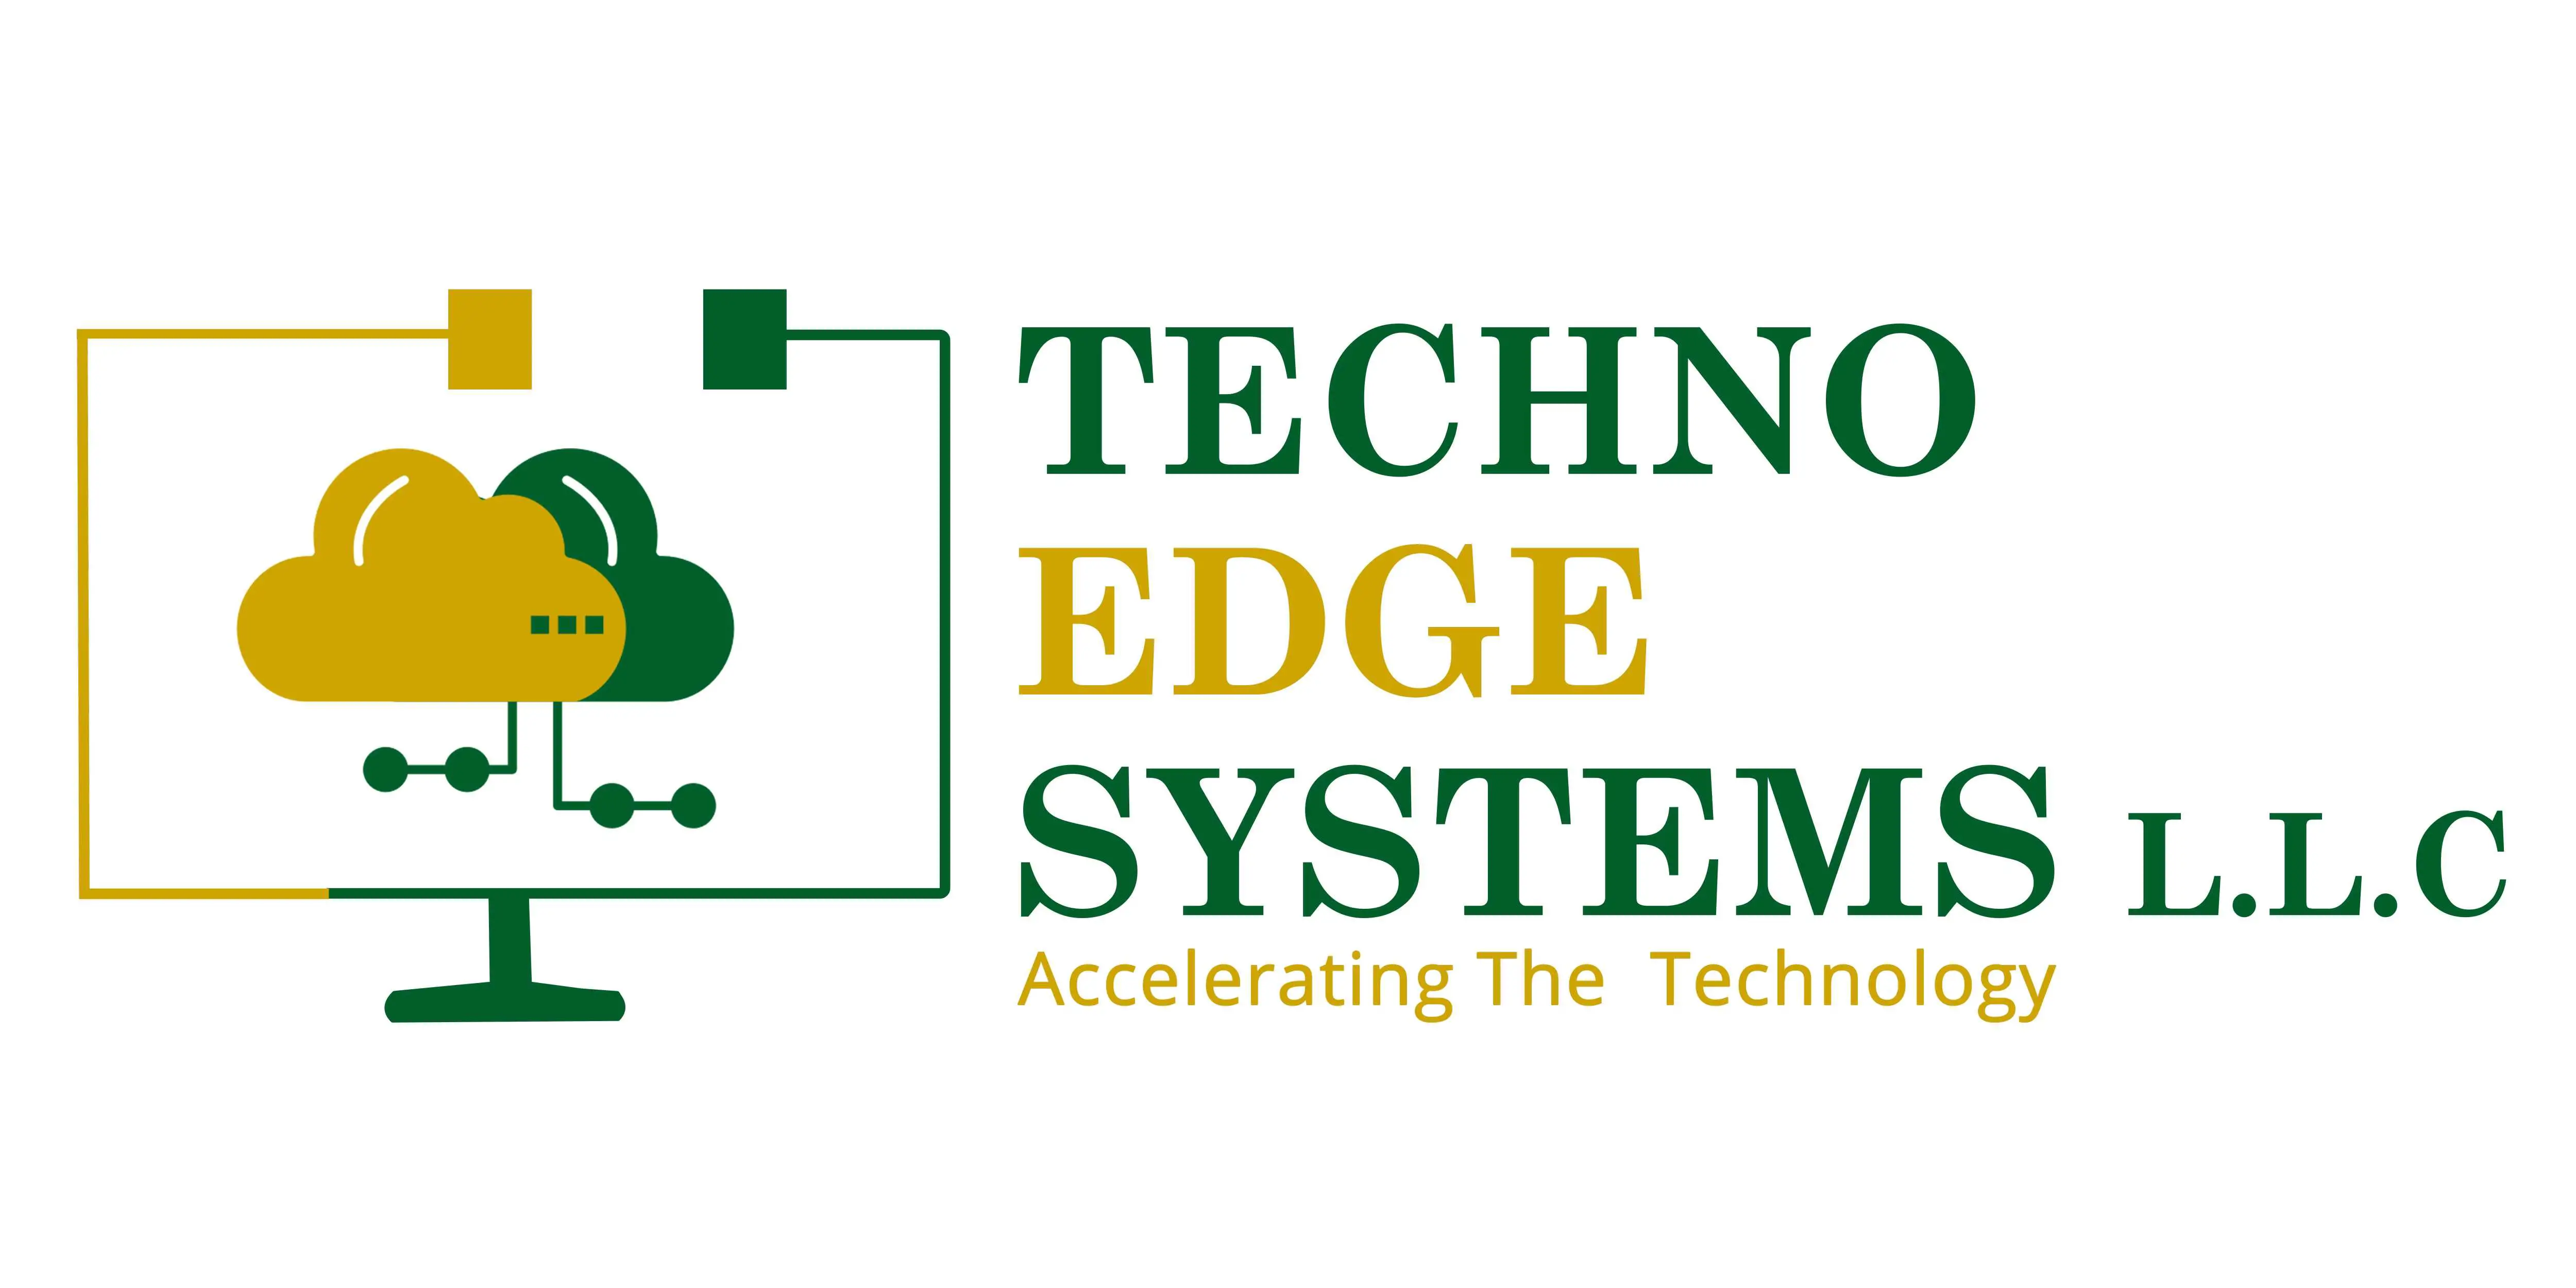 Techno Edge Systems LLC